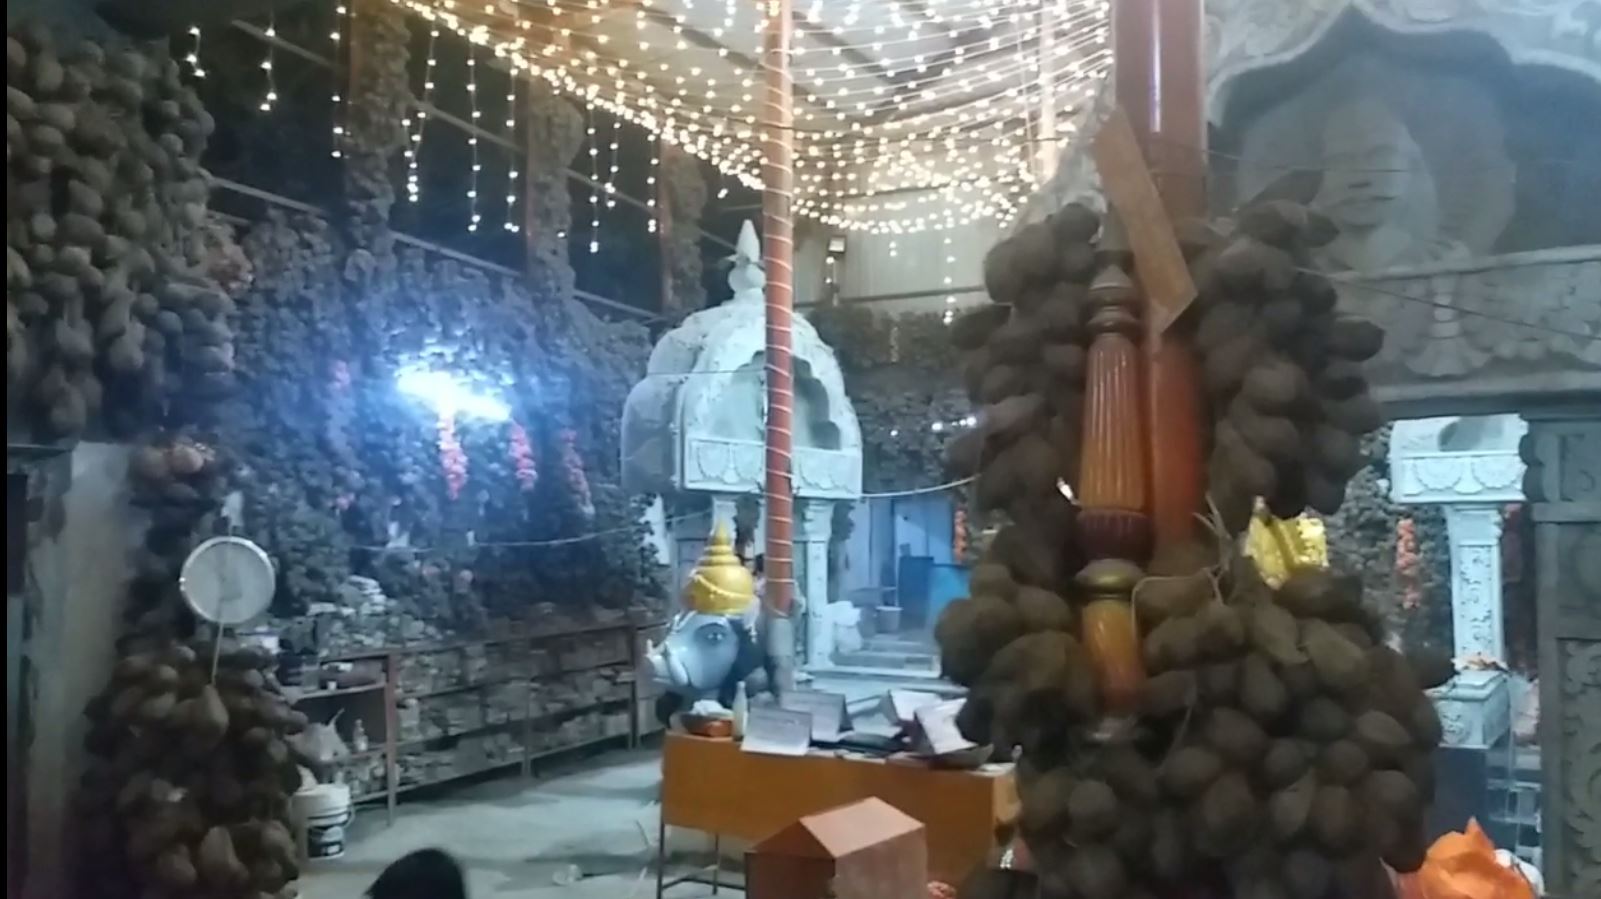 Devotees coconut offering to chhindwara hanuman temple